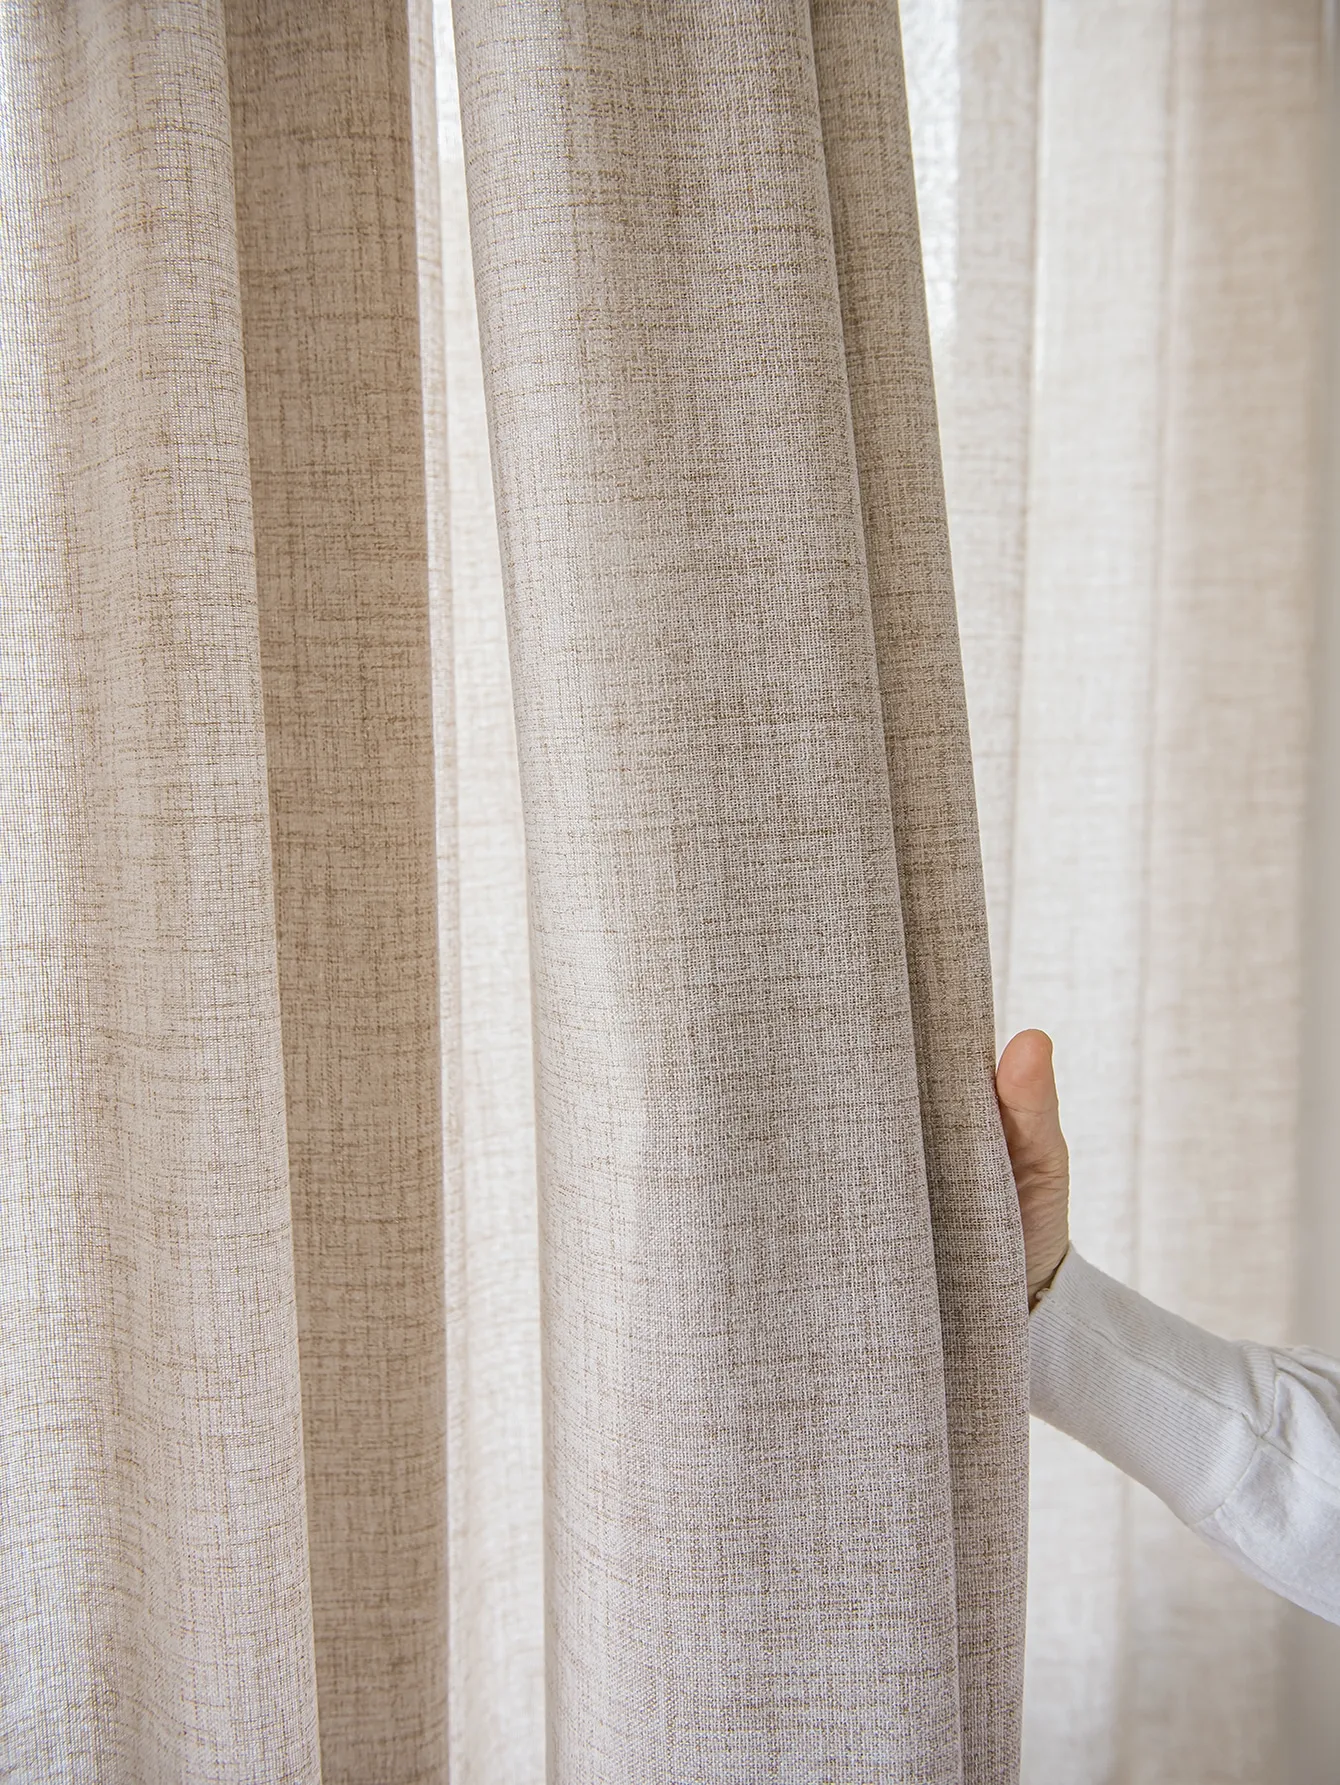 Japanese cotton and linen texture imitation linen semi shading window screen